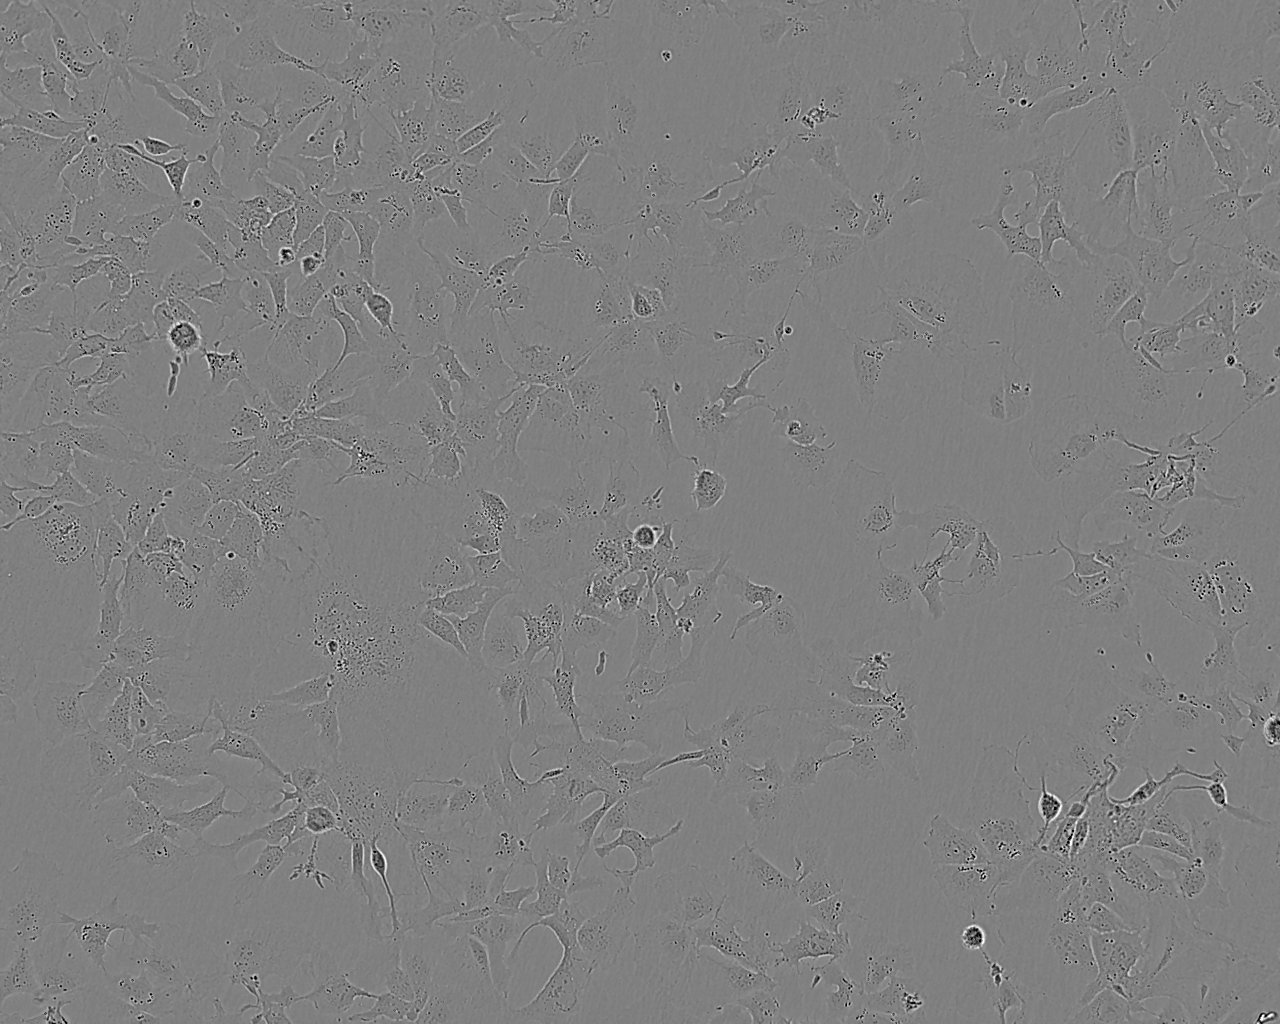 PFSK-1 Thawing人恶性胚瘤细胞系